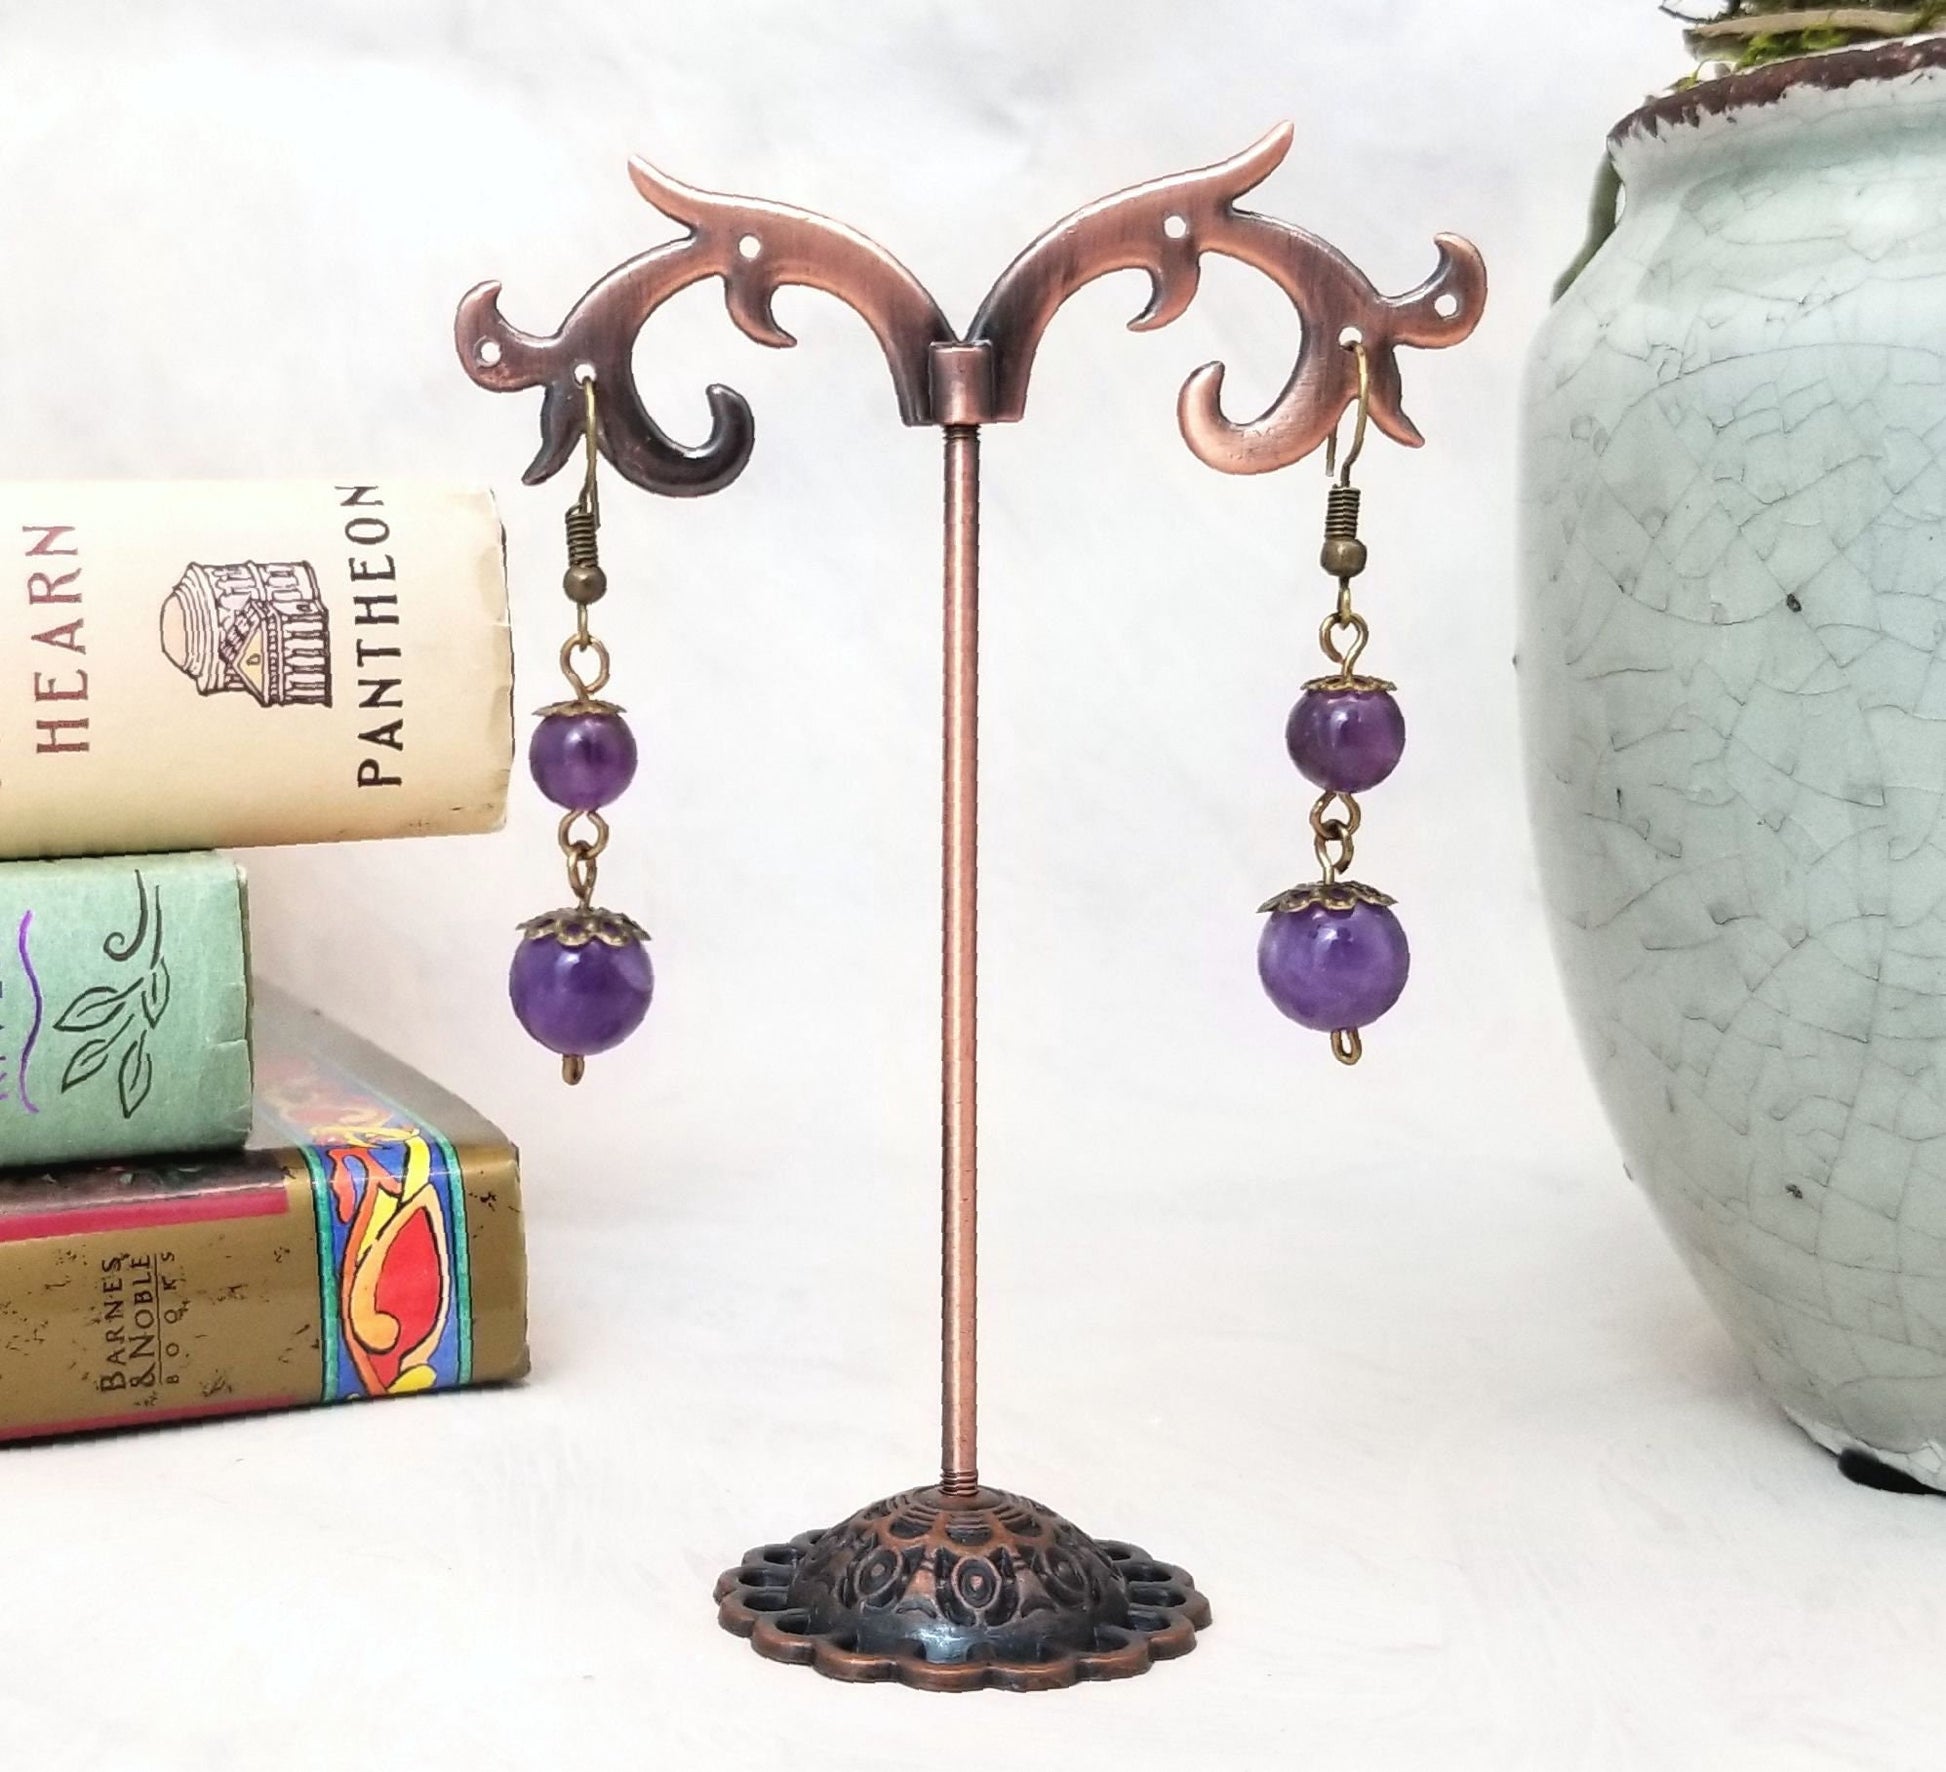 2-Tier Earrings in Purple, Wedding, Bridesmaid, Art Nouveau, Belle Époque, Renaissance, Garden, Choice of Metals and Closure Types